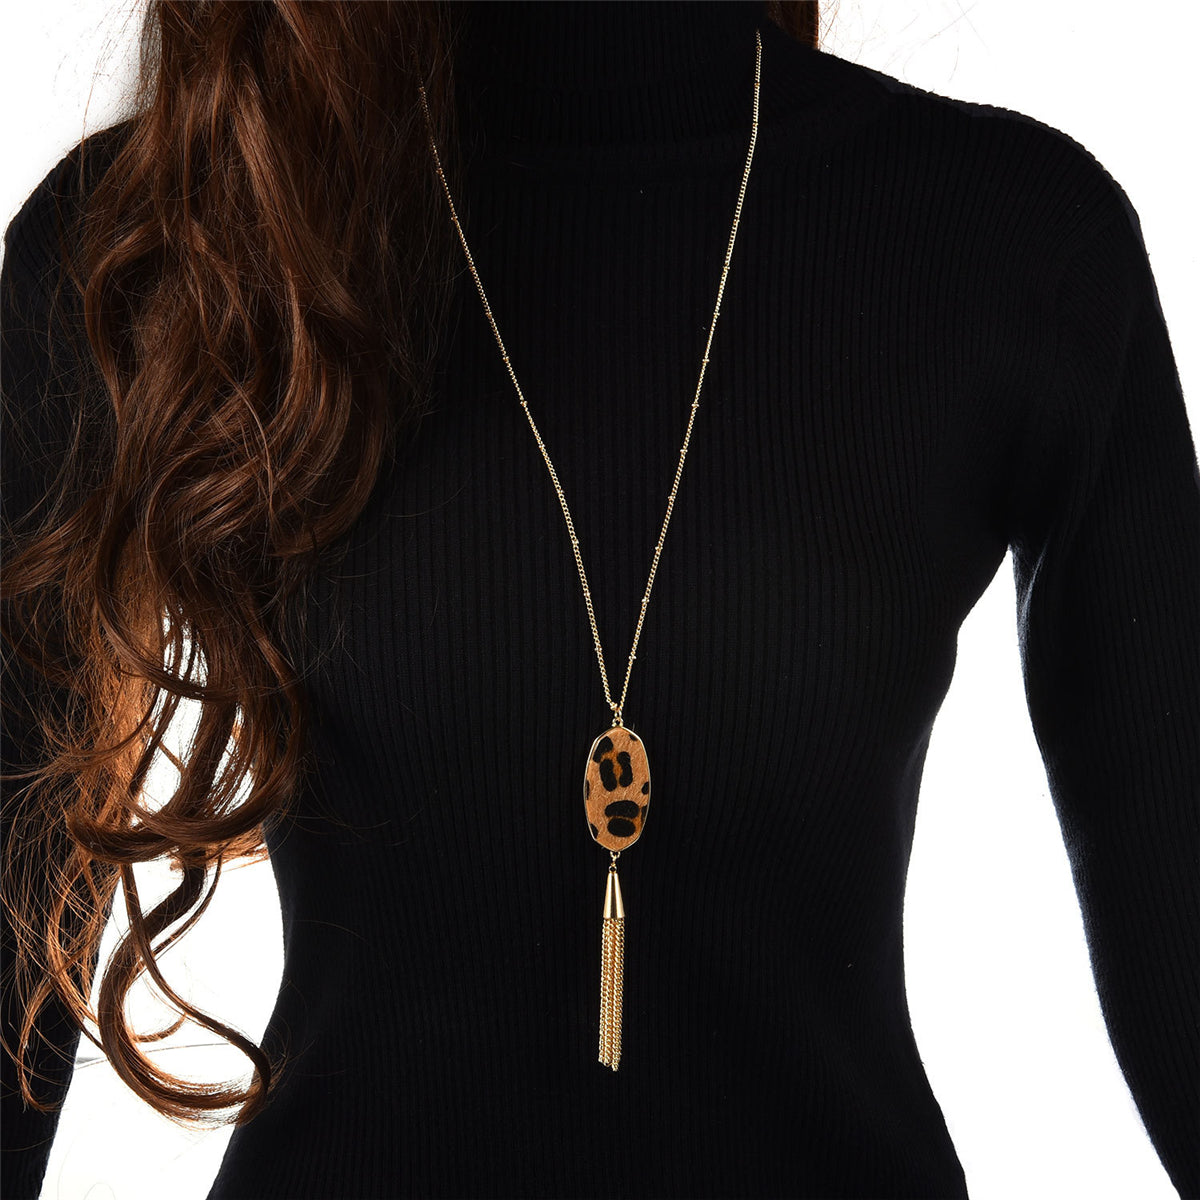 Tan Polyurethane & 18K Gold-Plated Slender Oval Tassel Pendant Necklace